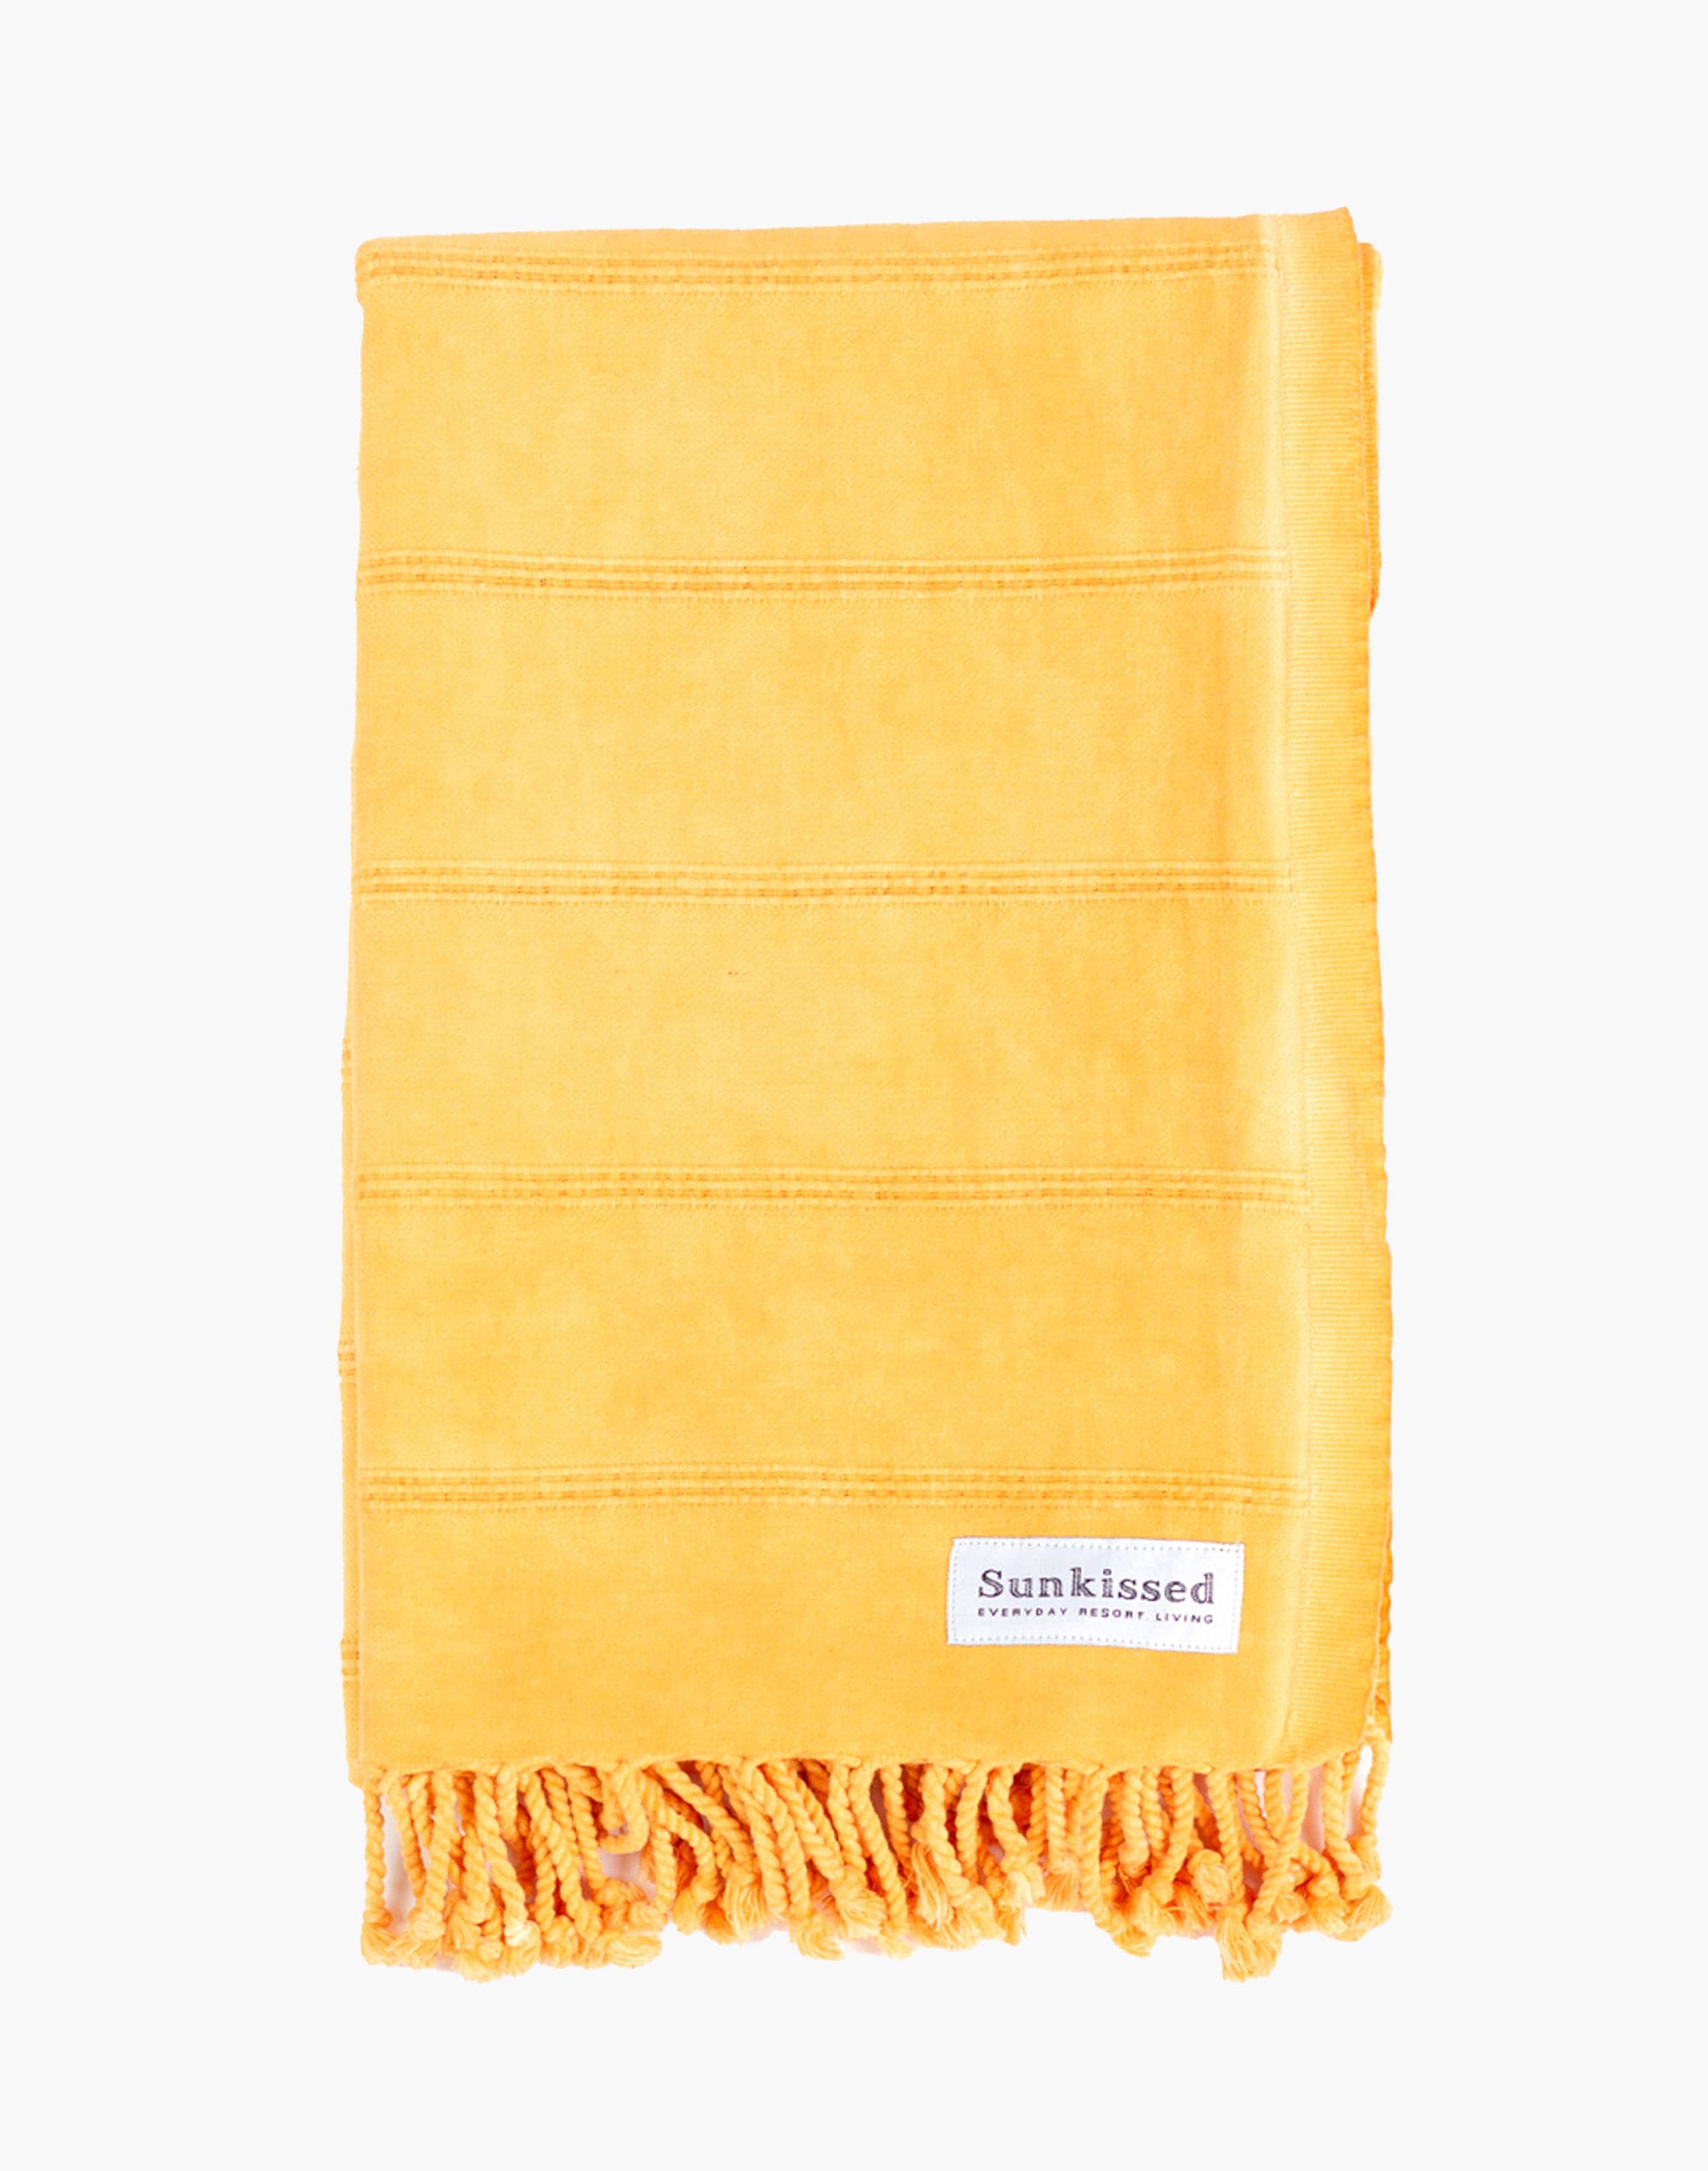 Sunkissed Organic Cotton Tuscany Sand-Free Beach Towel